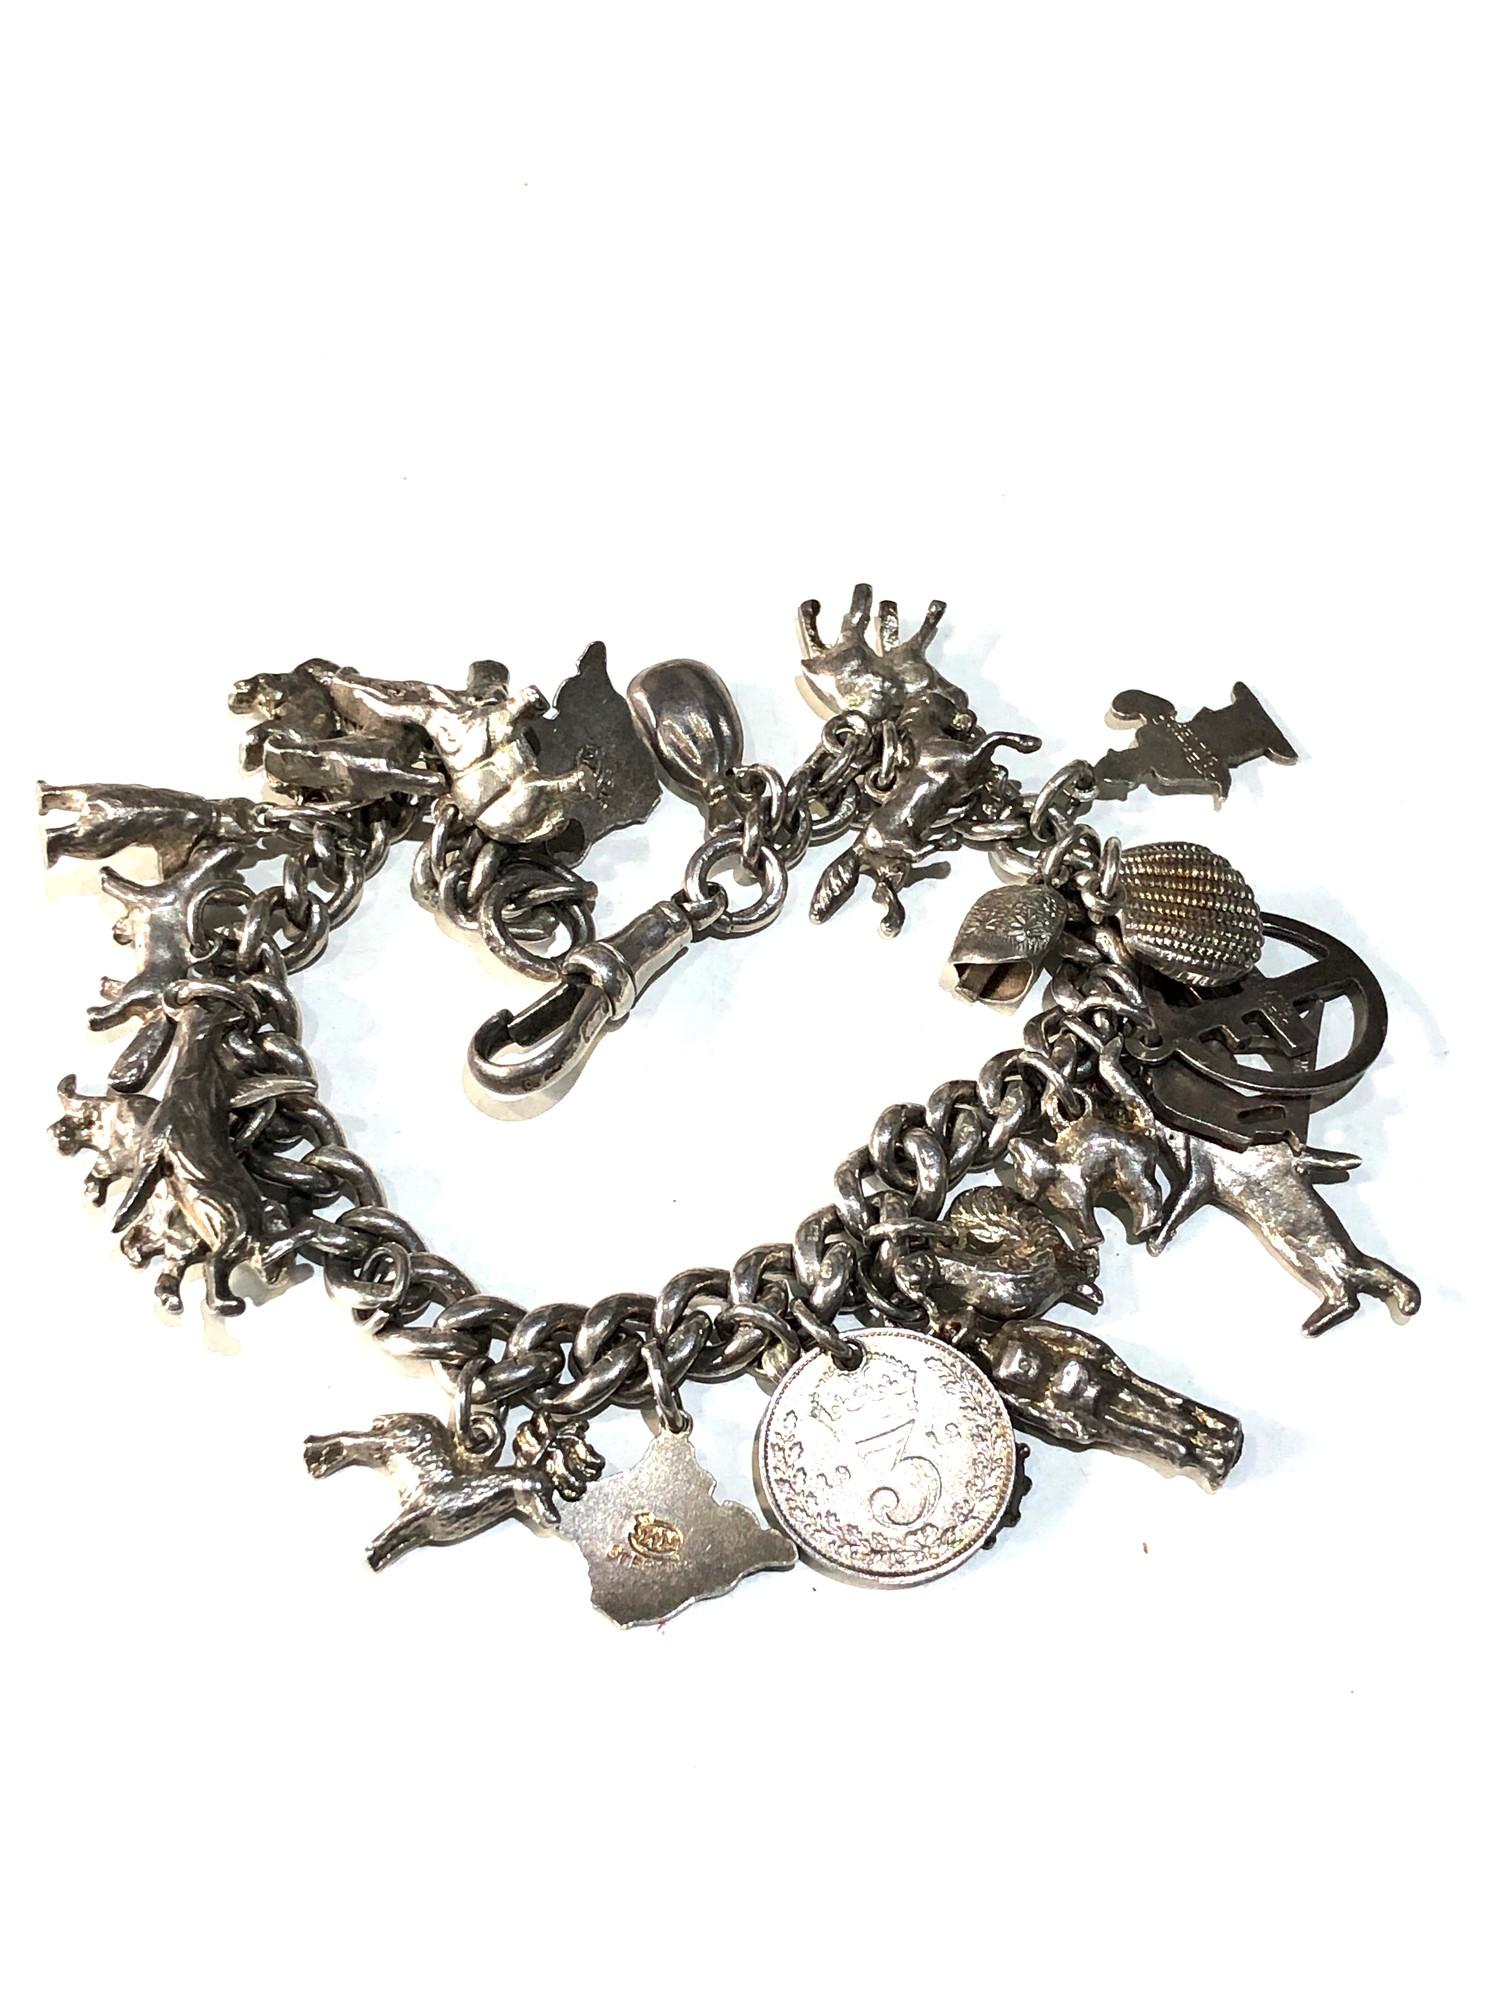 Vintage silver charm bracelet weight 57g - Image 2 of 3